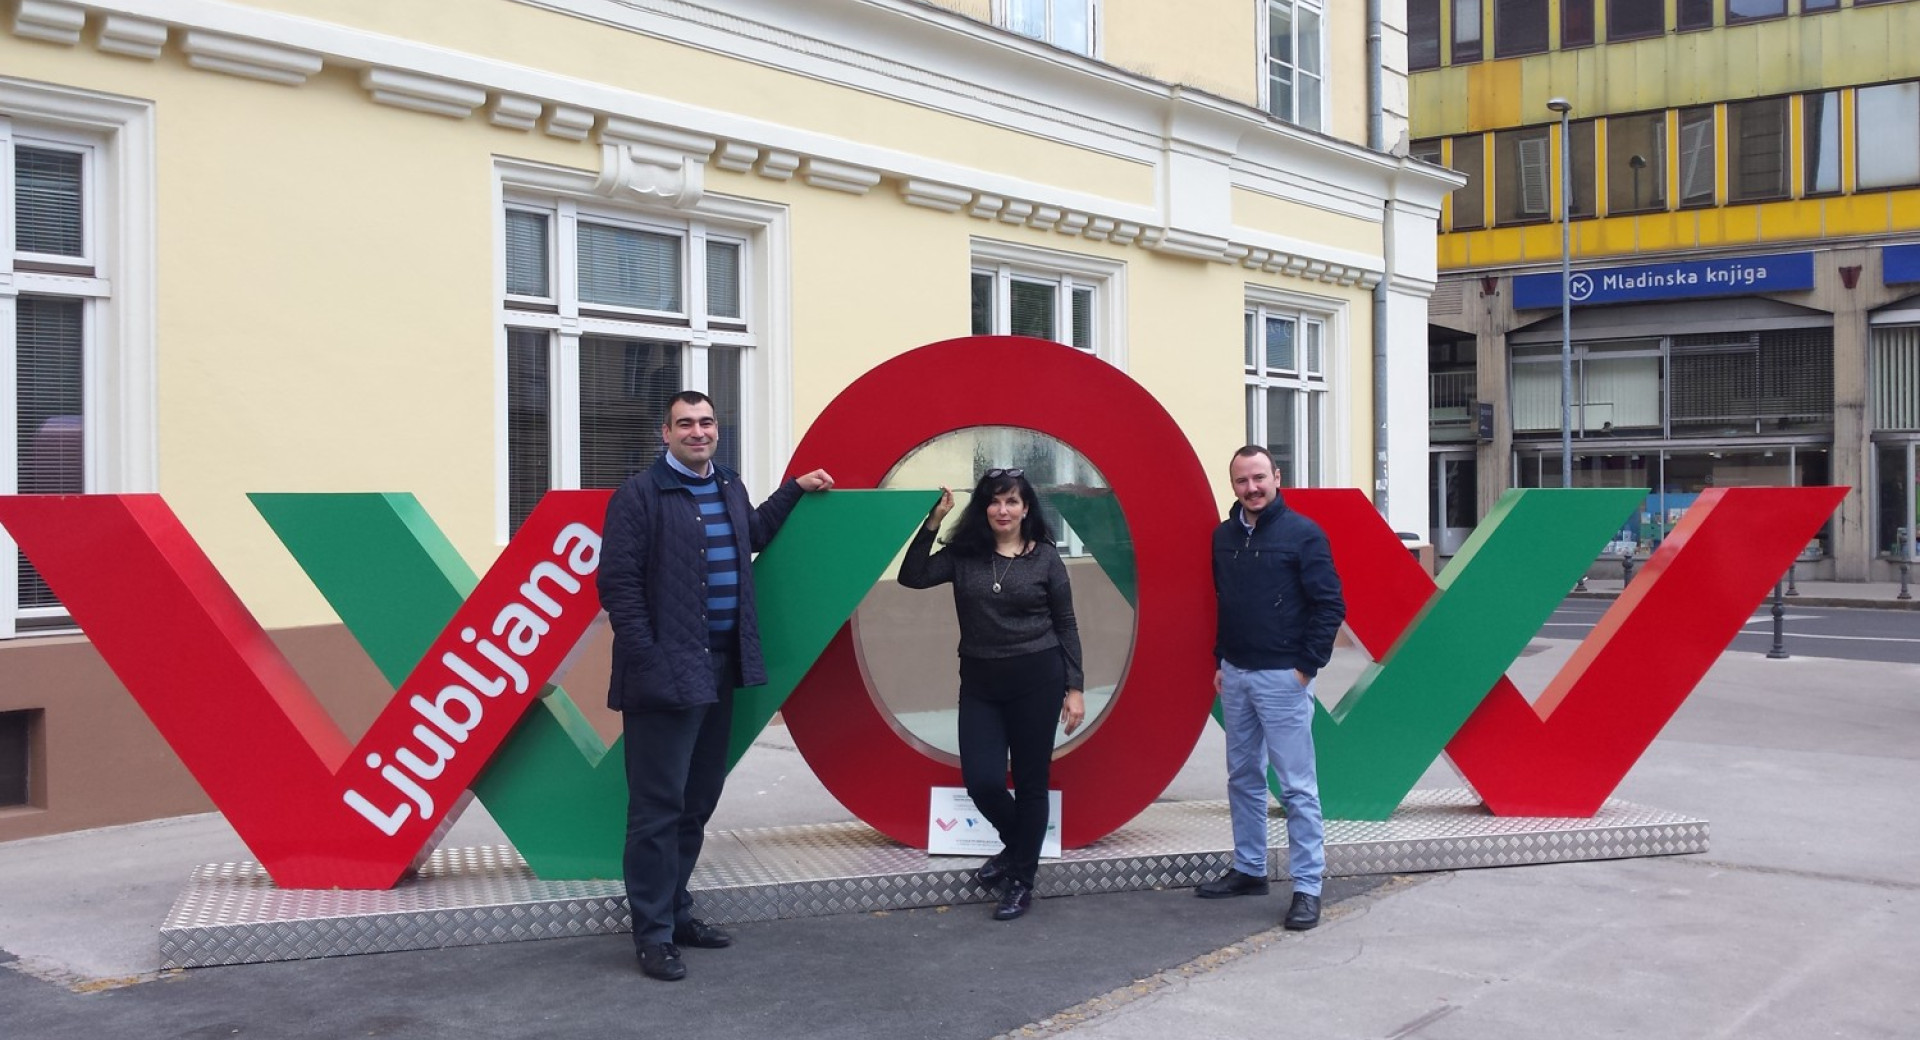 Ljubljana wins a new congress for september 2016